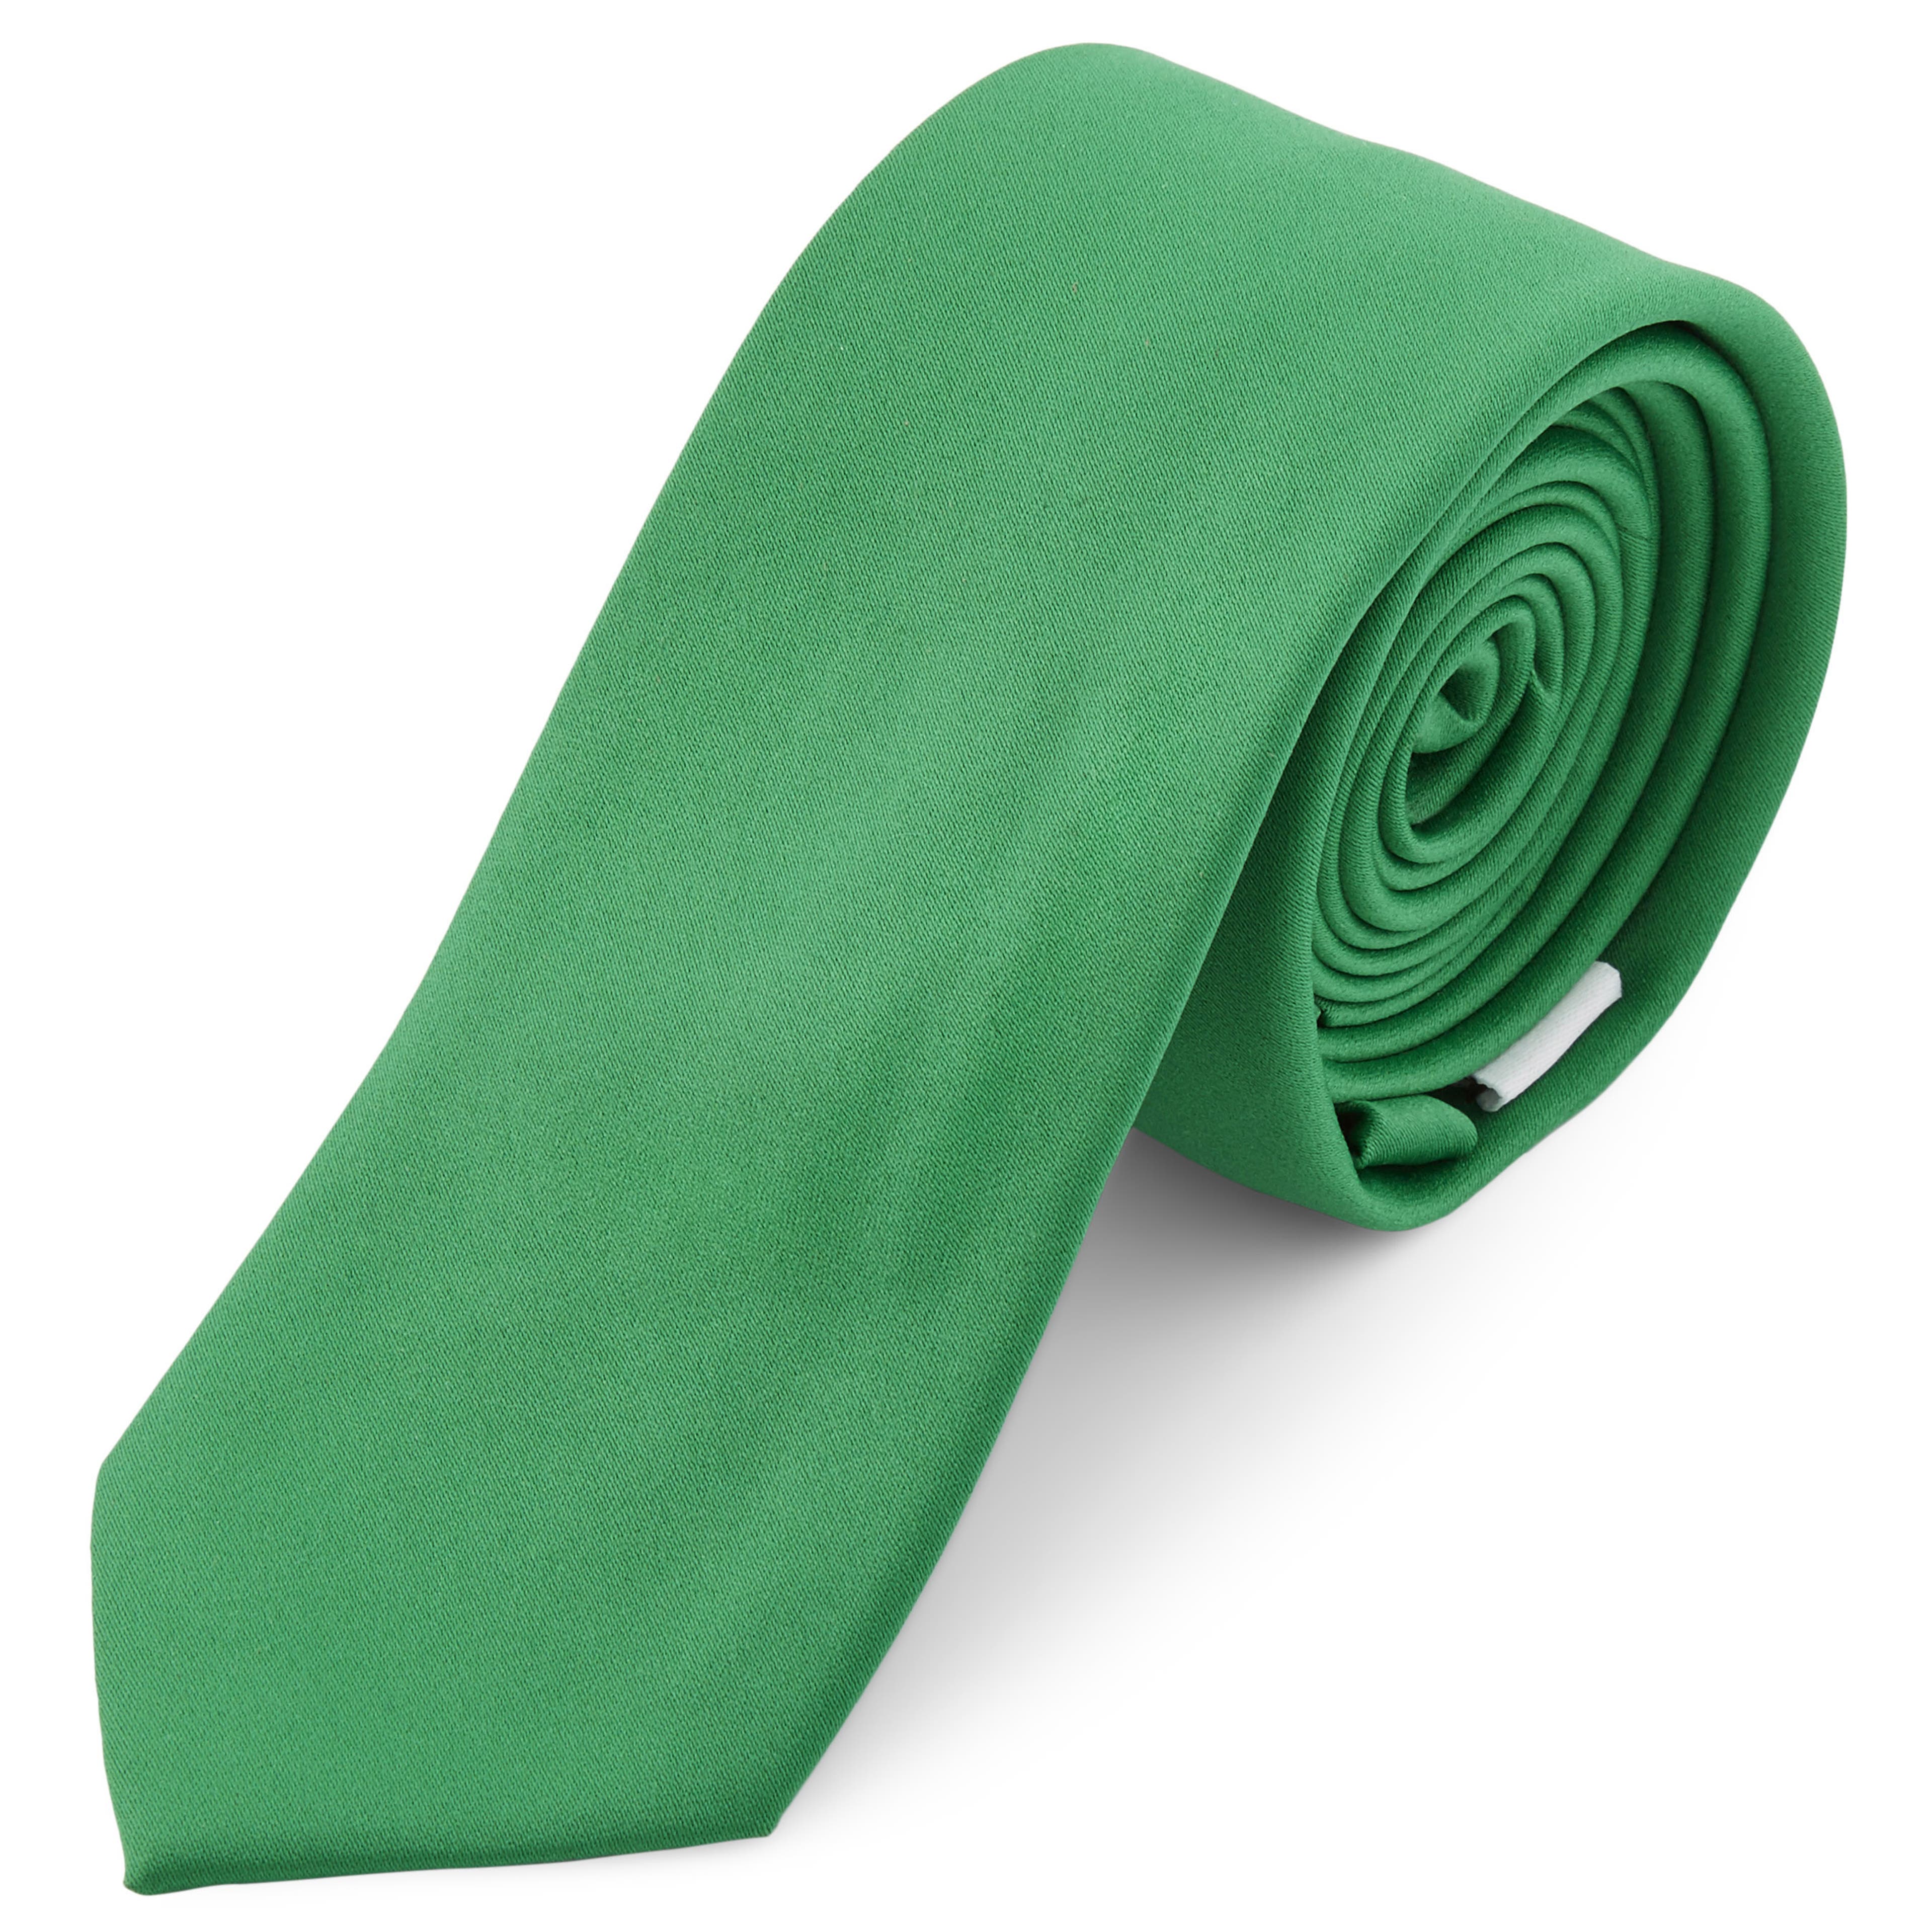 Едноцветна изумруденозелена вратовръзка 6 см